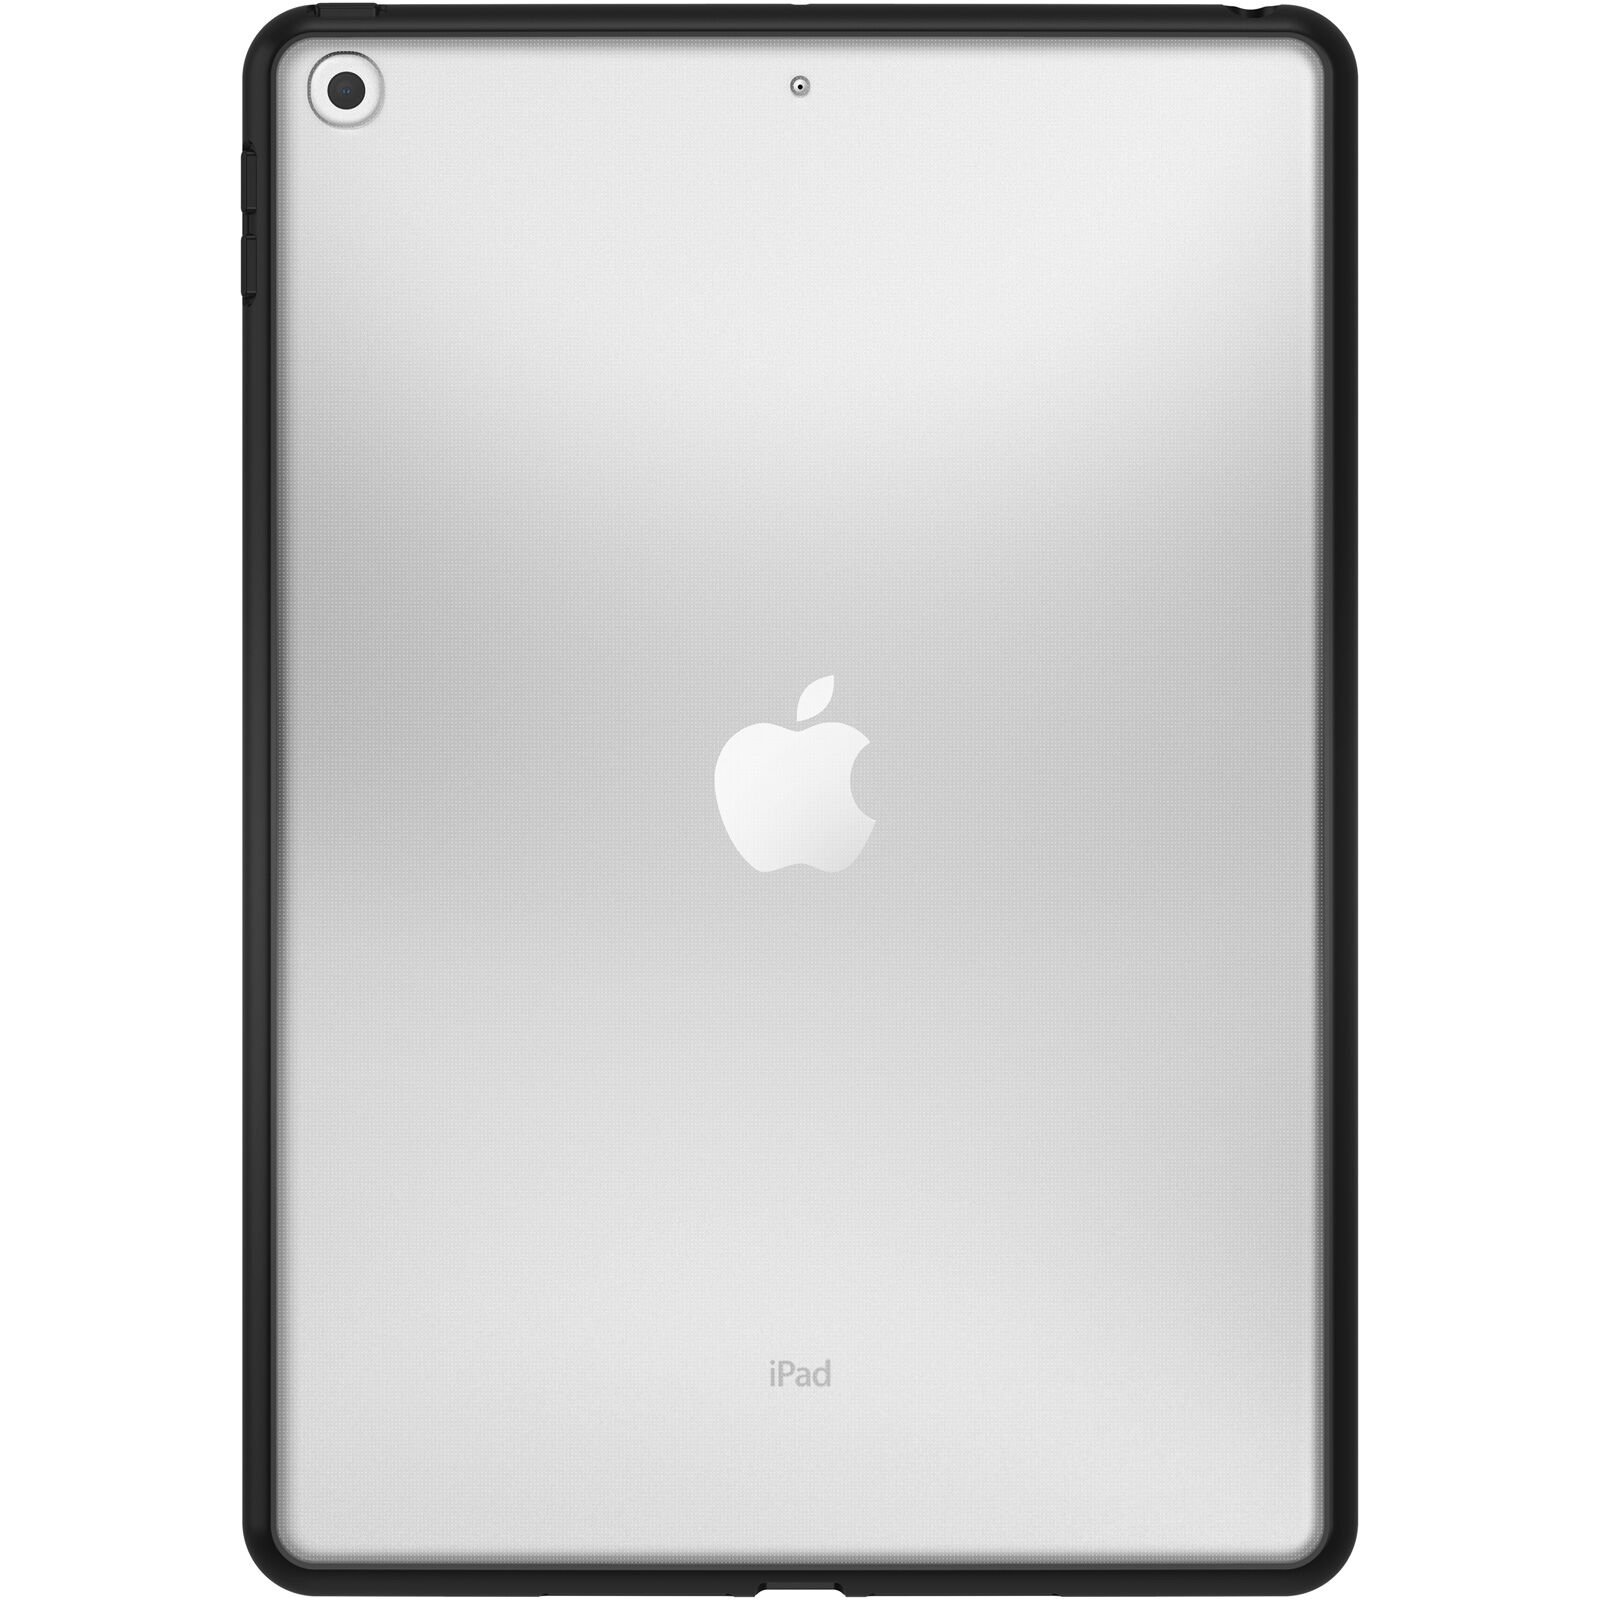 Cover React iPad 10.2 8th Gen (2020) Black Crystal